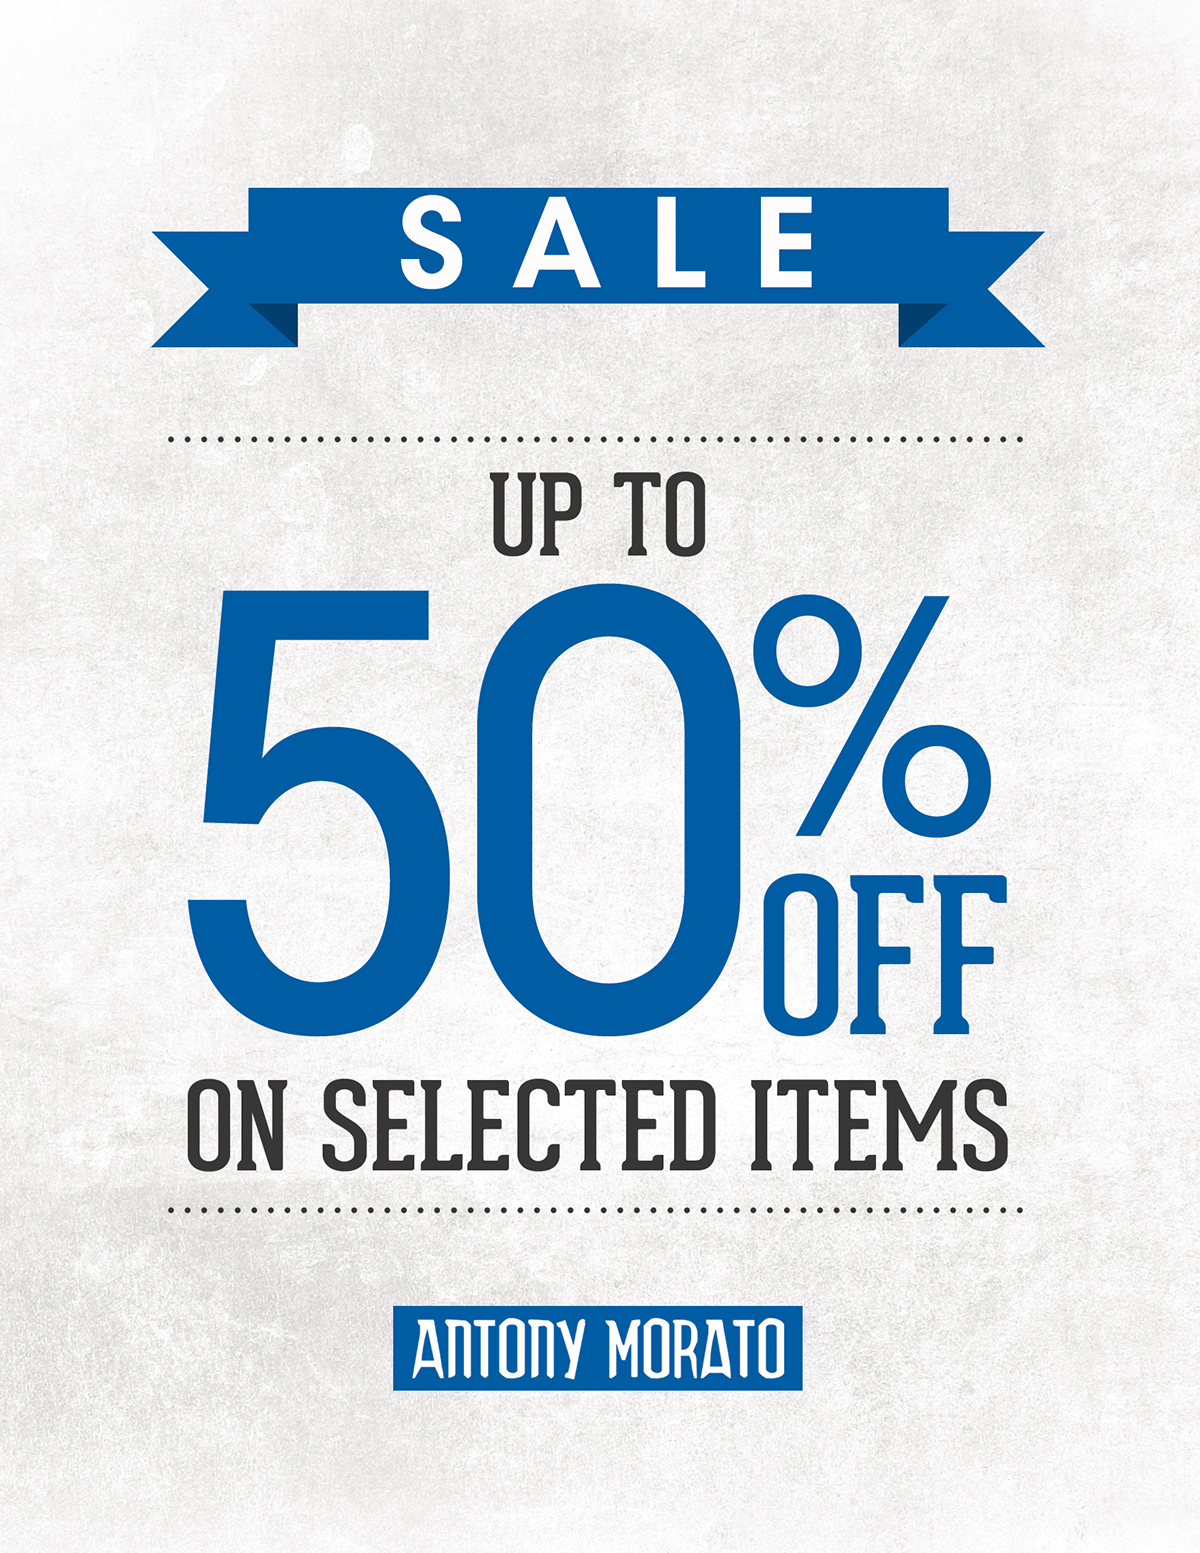 ANTONY MORATO Morato Philippines morato.it Retail sale promo poster advertisement Promotion